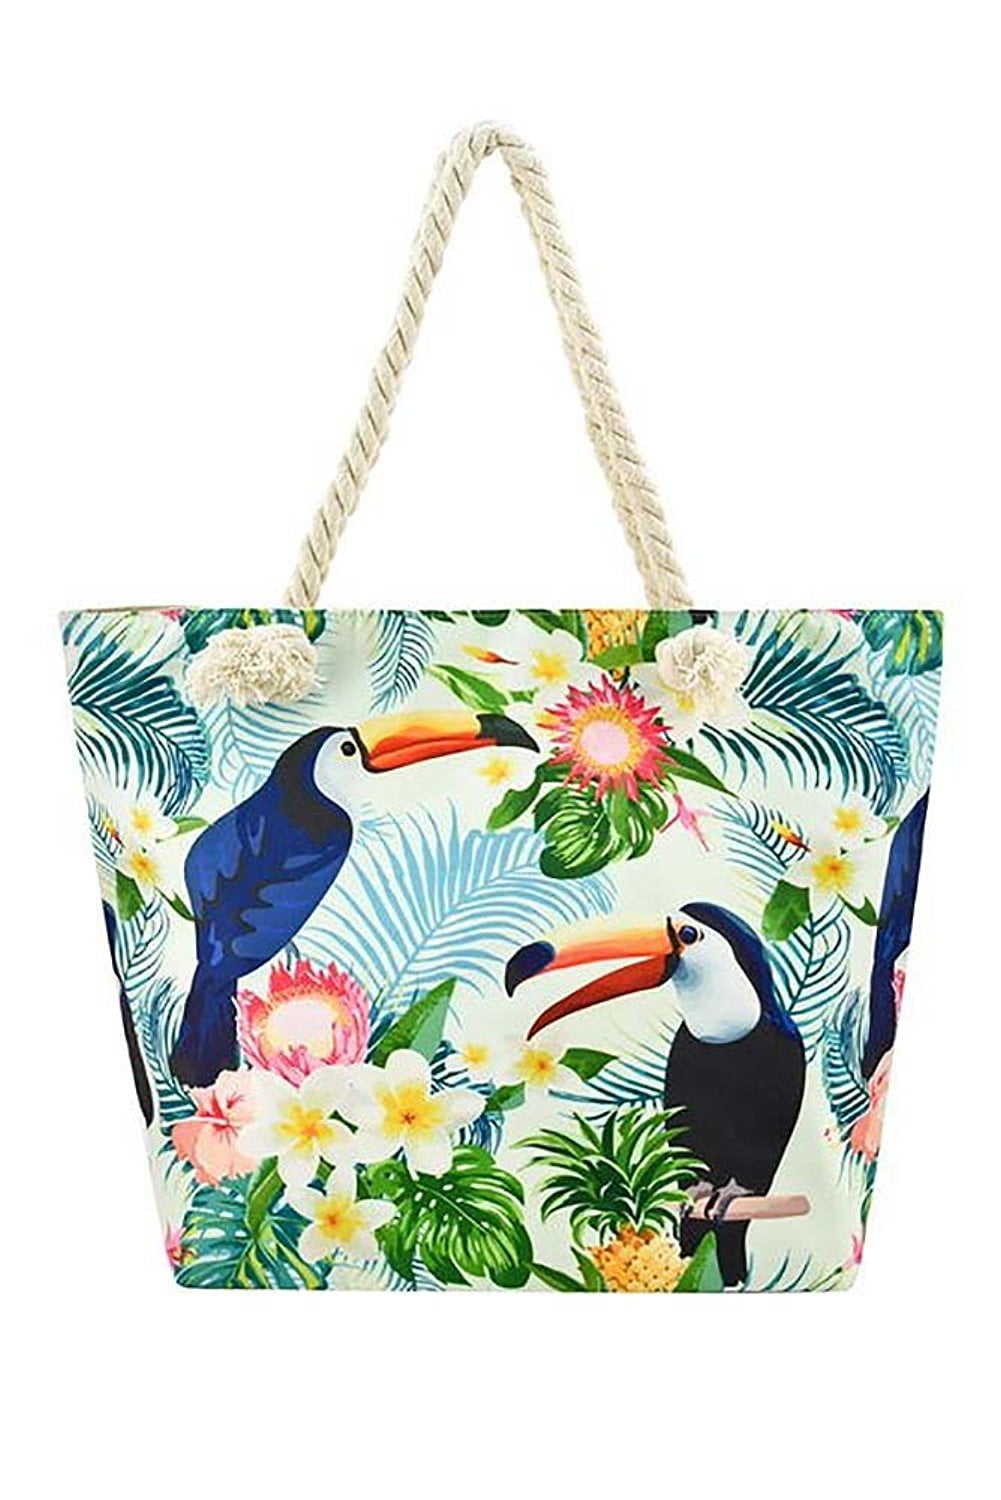 Tropical Toucan Double Side Print Black Tote Bag Purse Handbag for Women Girls